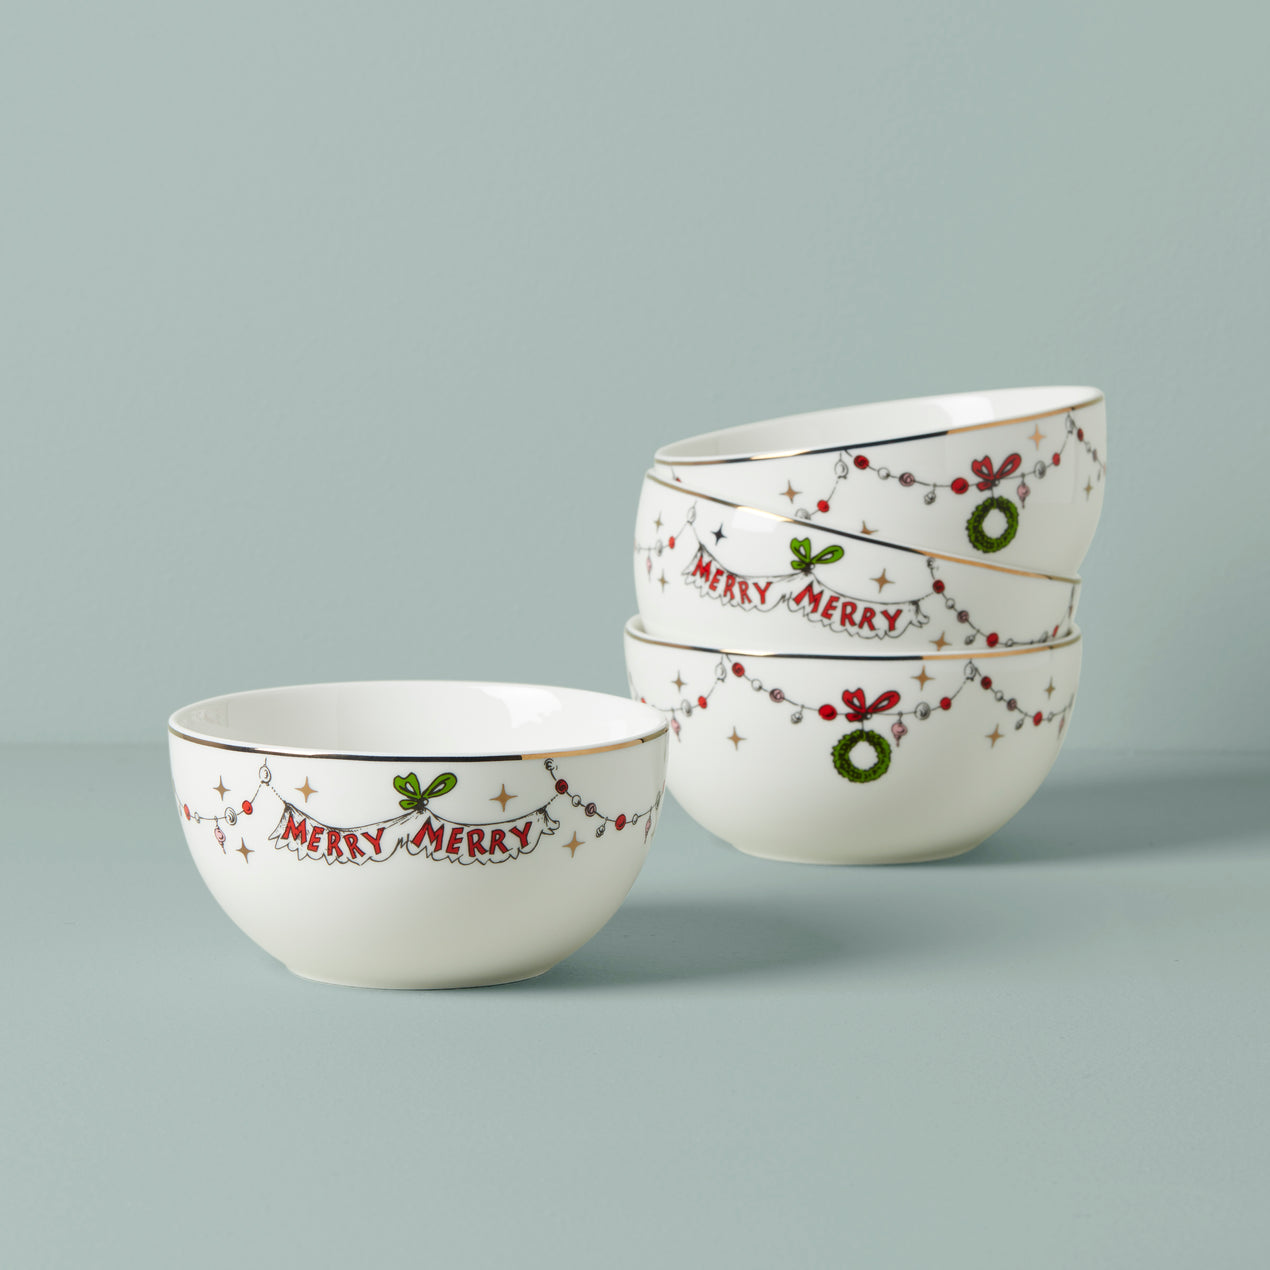 Merry Grinchmas All-Purpose Bowls, Set of 4